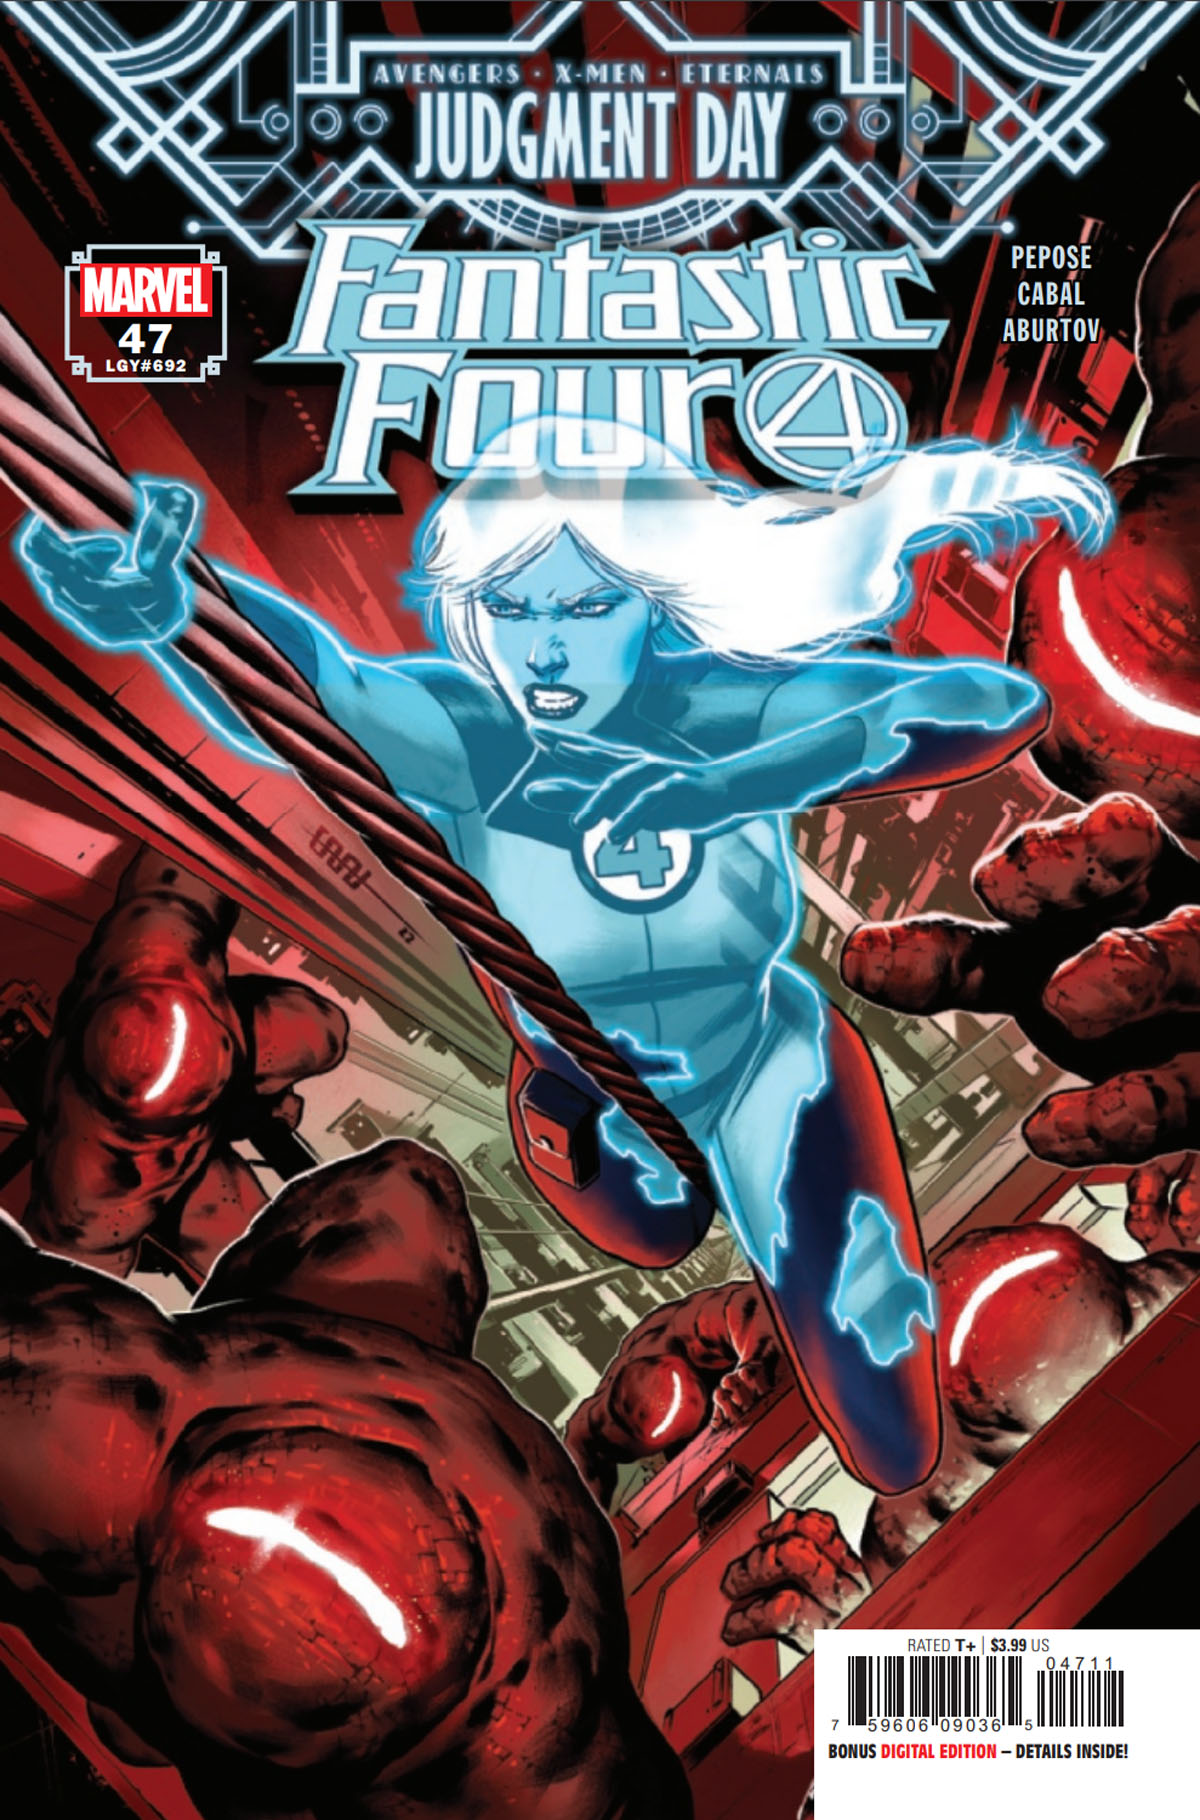 Fantastic Four #47 cover